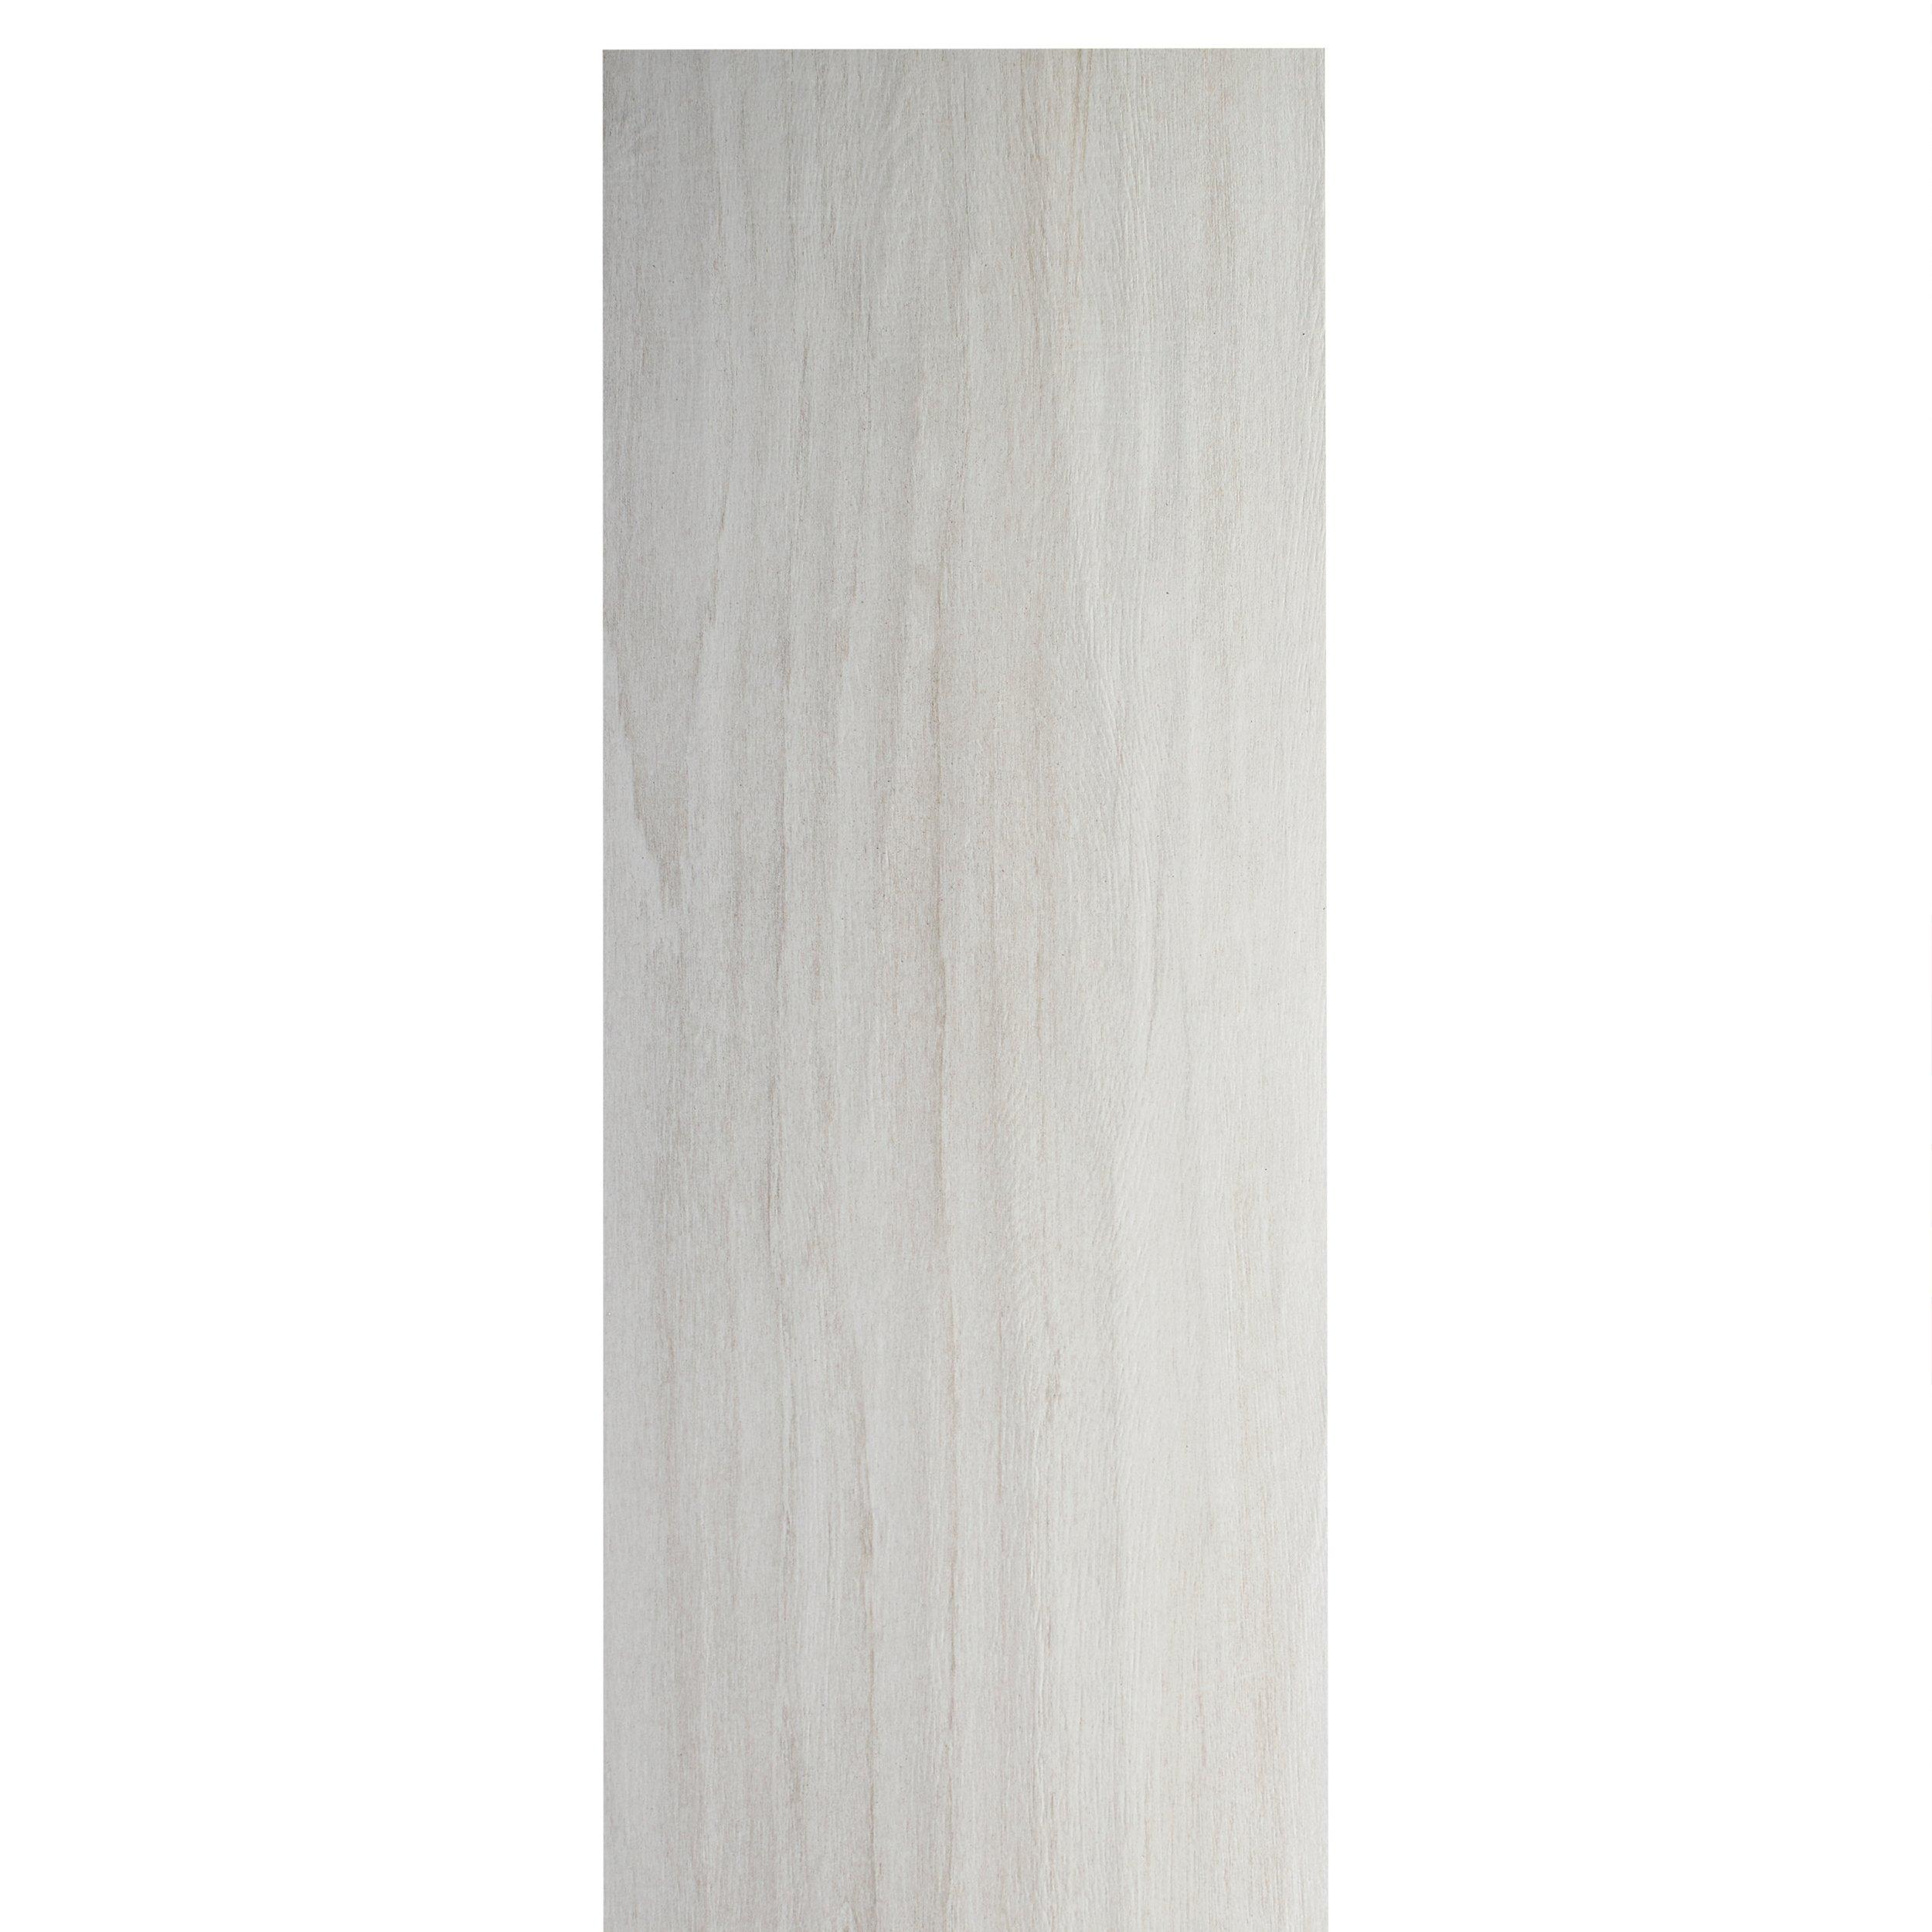 Sedon Lodge Beach Wood Plank Porcelain Tile